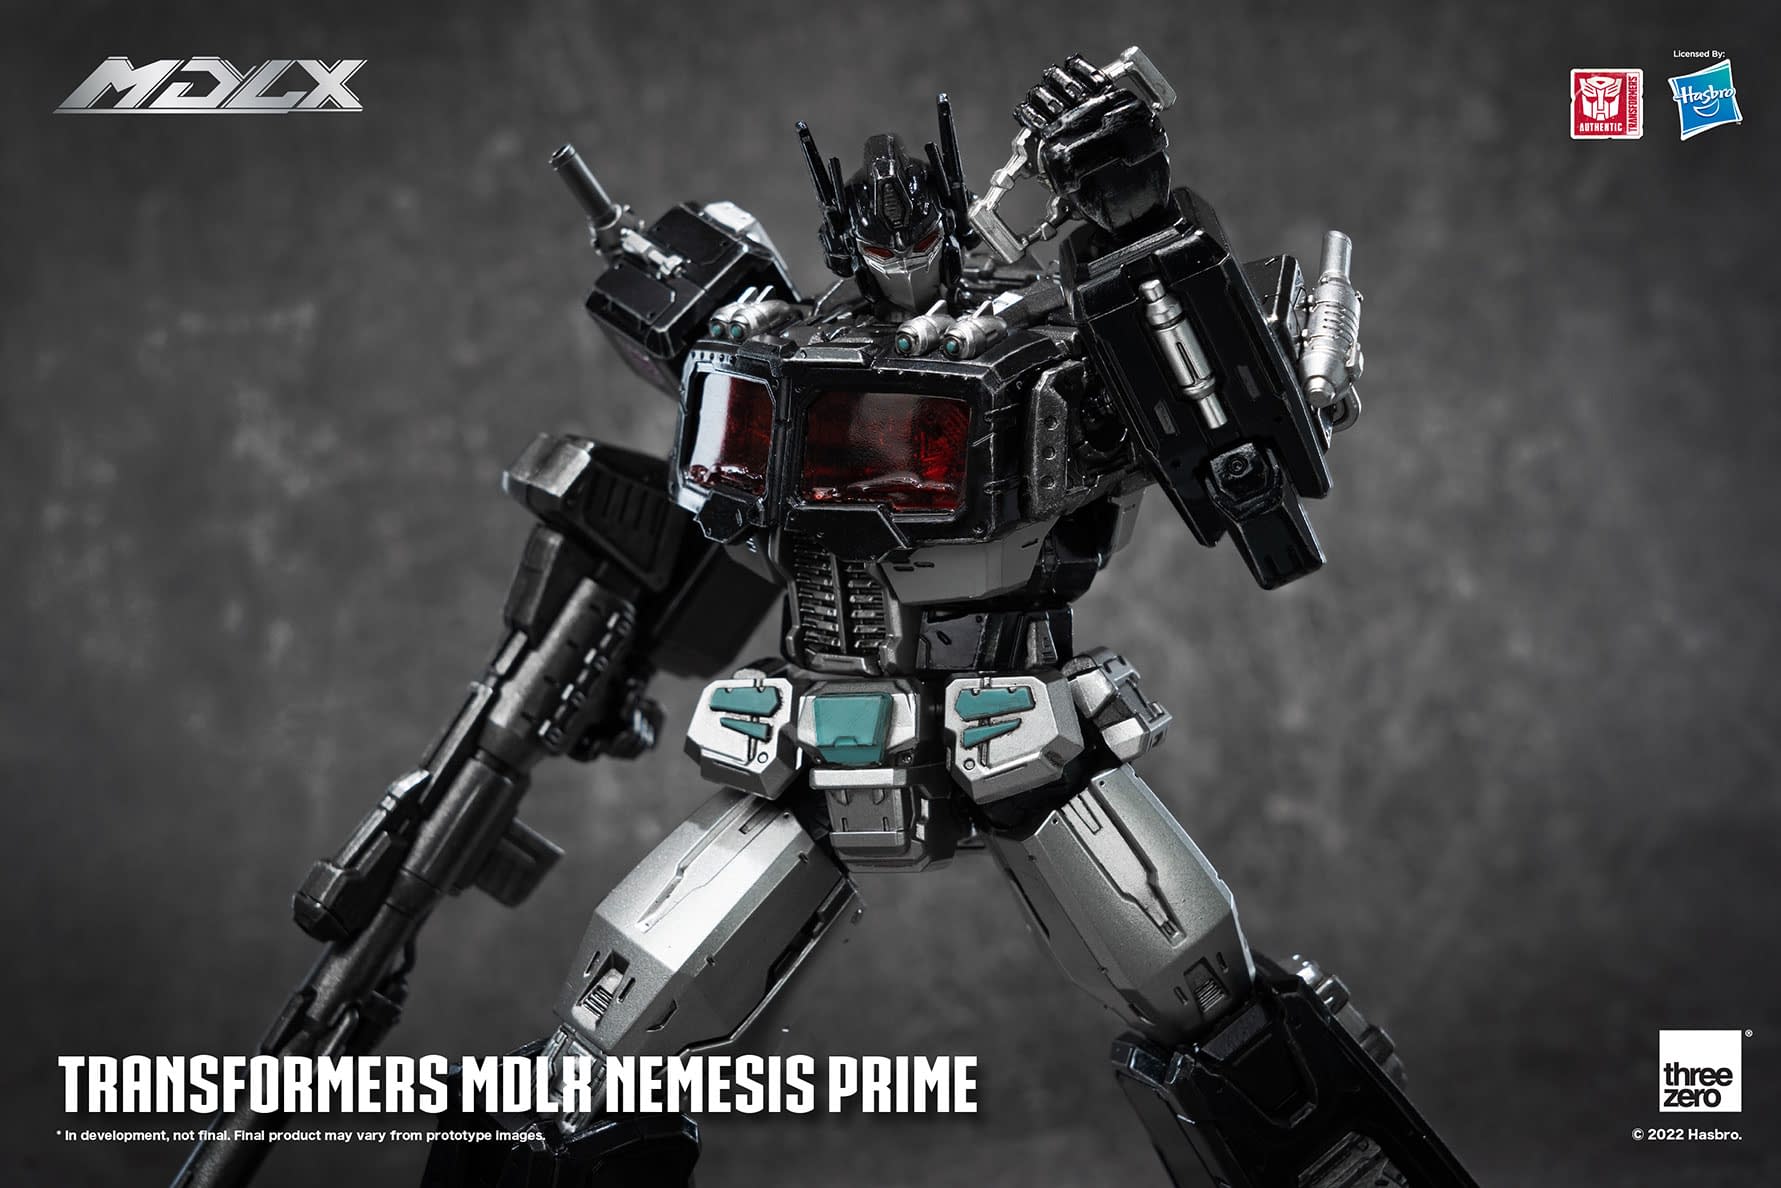 Transfomers Nemesis Prime Comes To threezero's Die-Cast MDLX Line